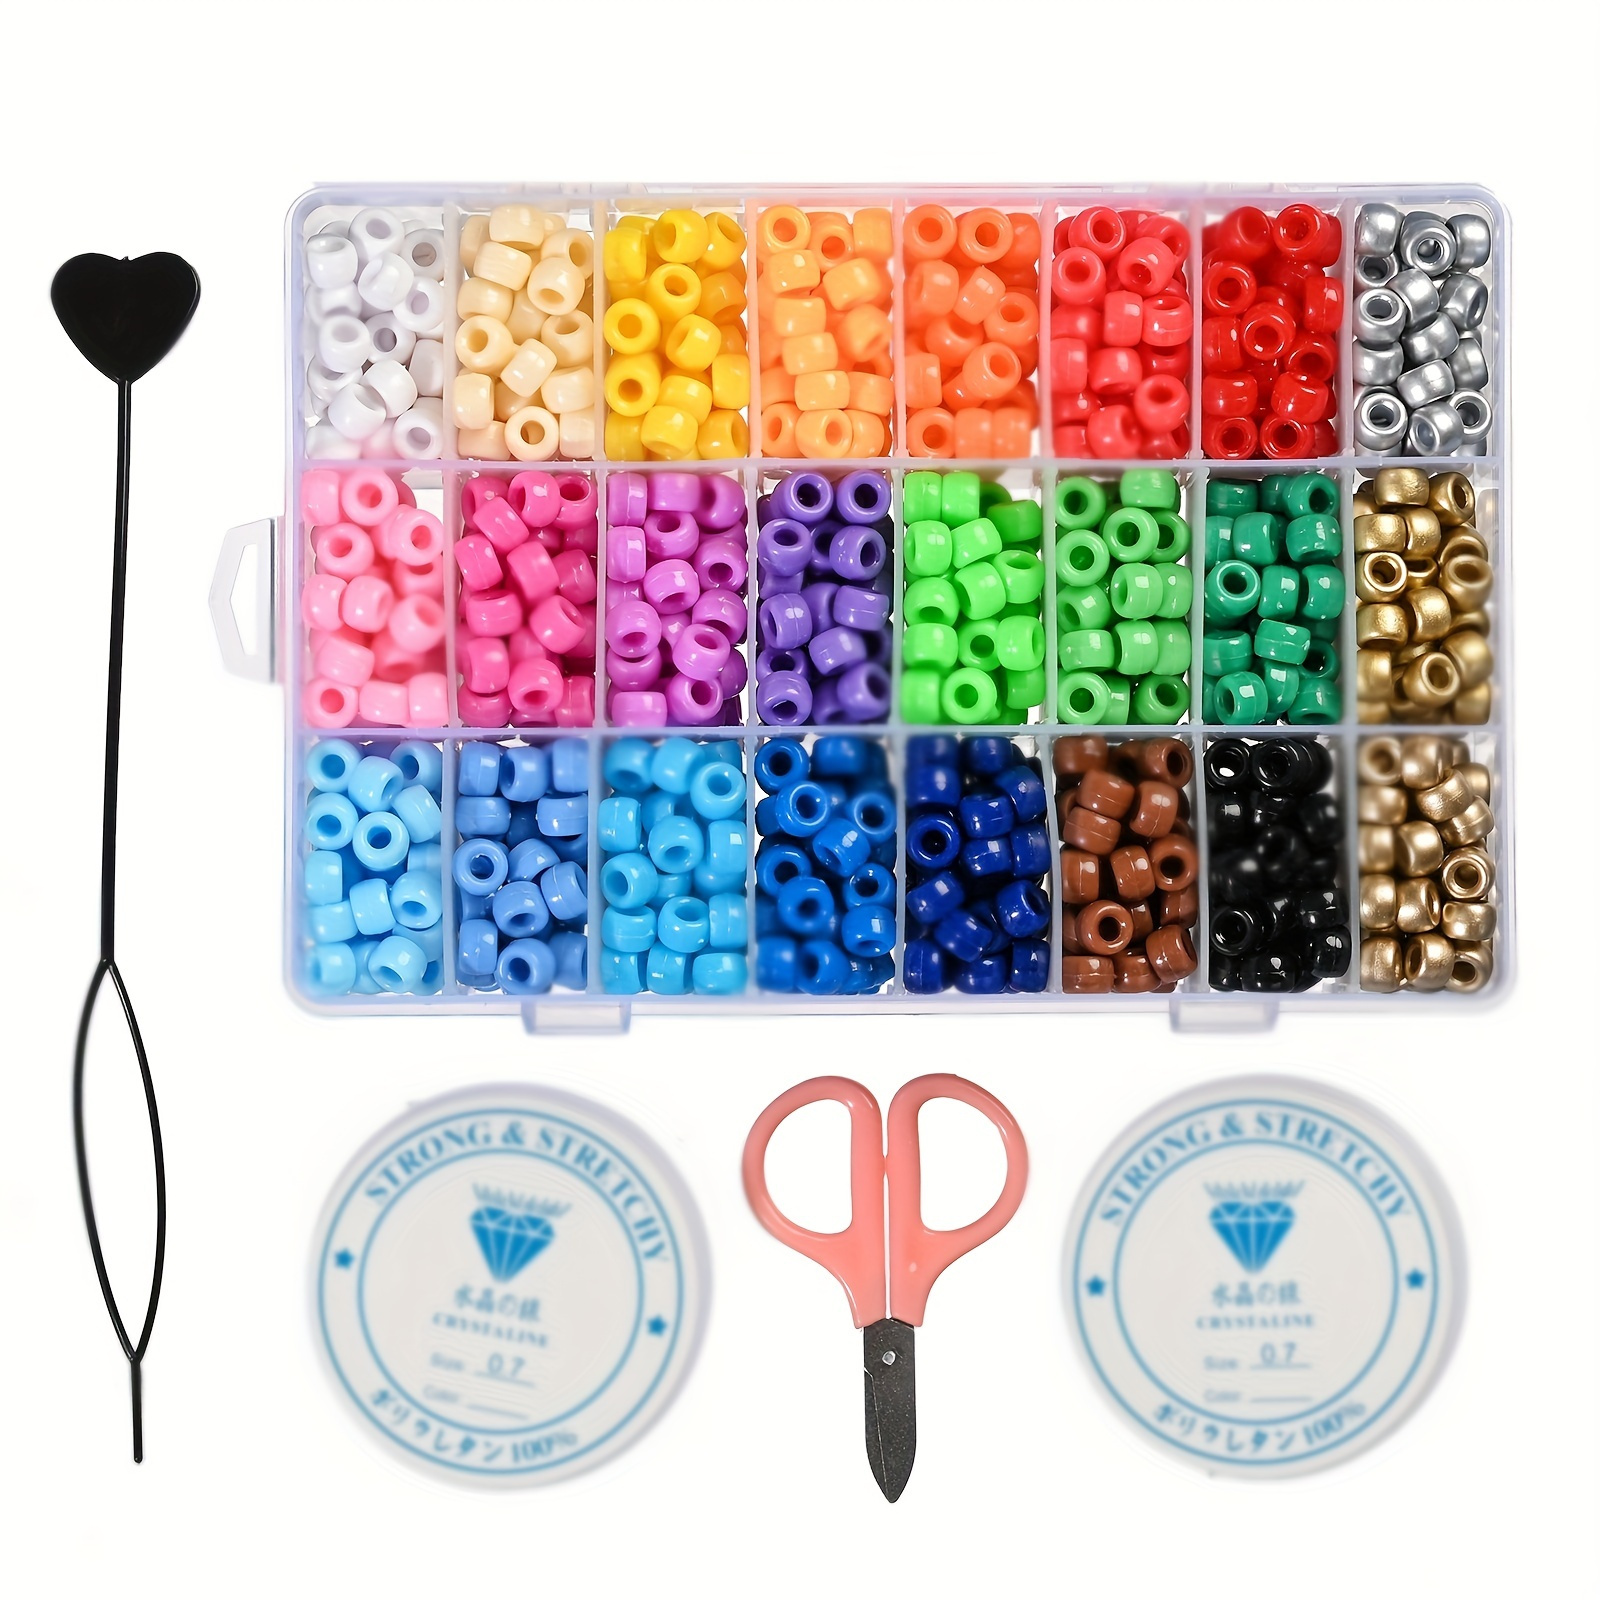 200/500/1000pcs 6x9mm Pony Beads Bulk, Macaroon Pastel Pony Beads For  Bracelets Making Kit, Kandi Beads, Hair Beads For Braids, Craft Beads For  Jewelr